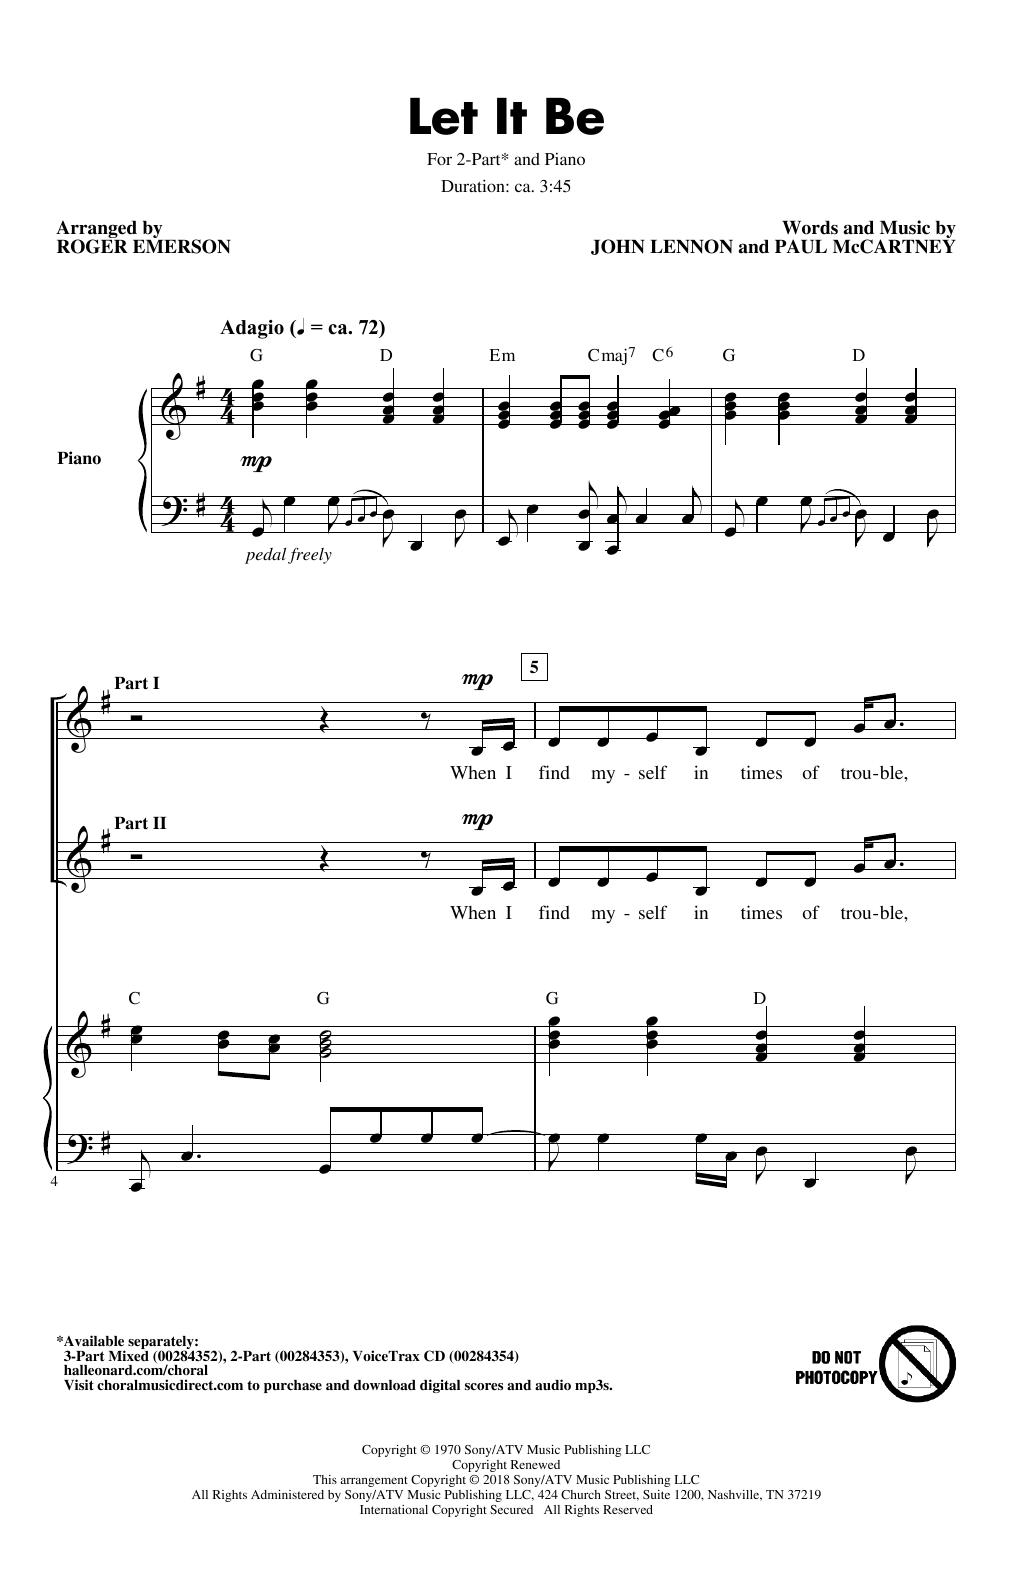 The Beatles Let It Be Arr Roger Emerson Sheet Music Pdf Notes Chords Pop Score 2 Part Choir Download Printable Sku 407405